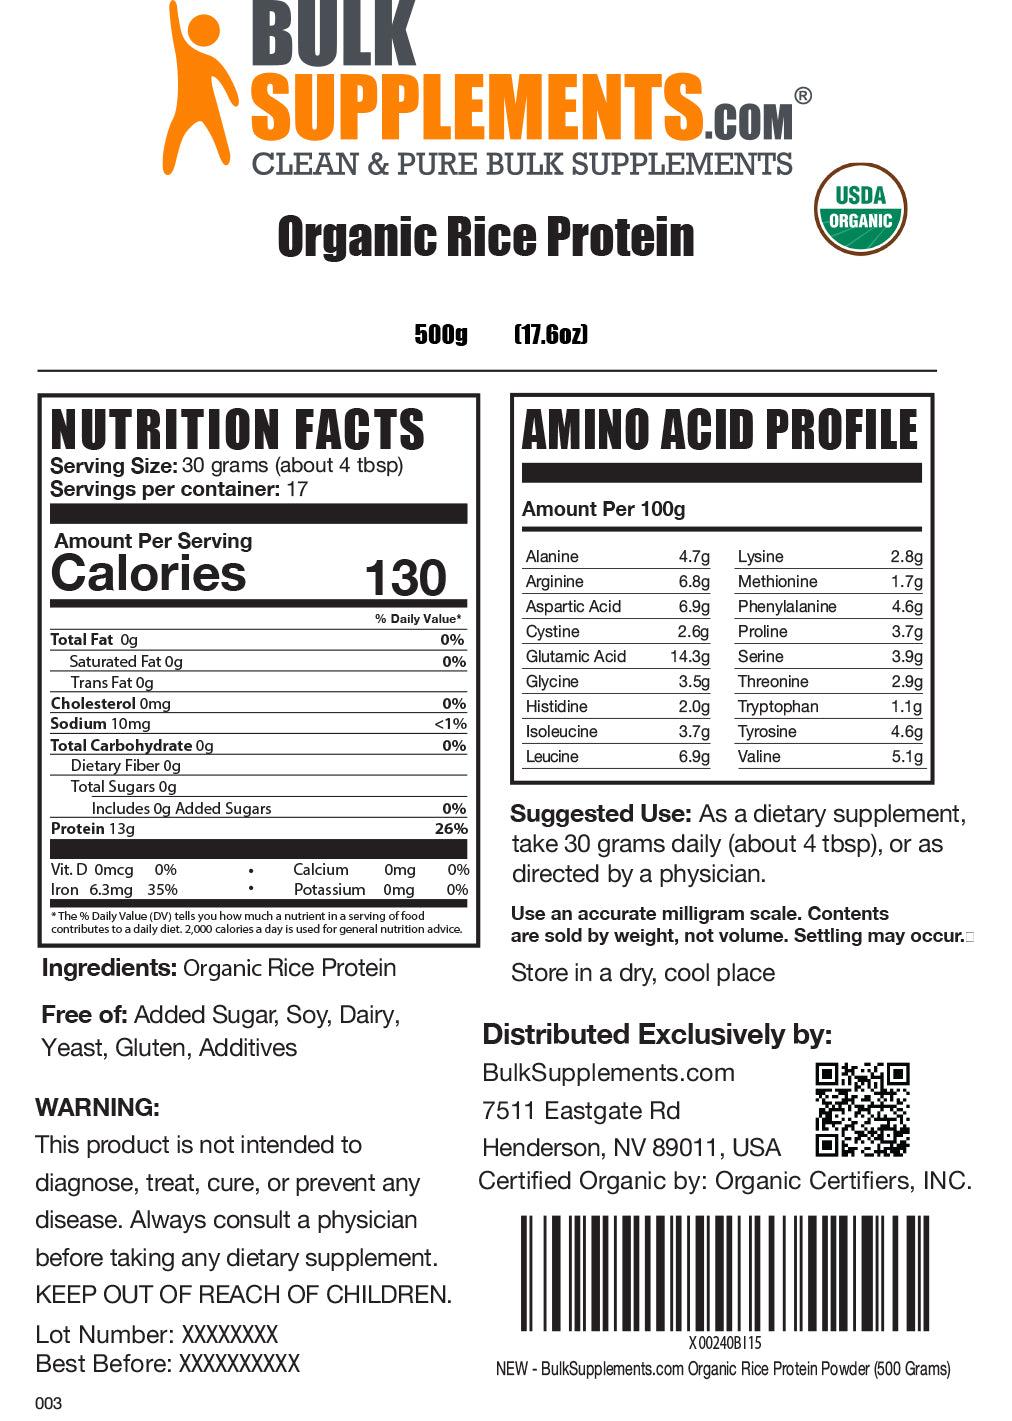 Organic Rice Protein Powder label 500g